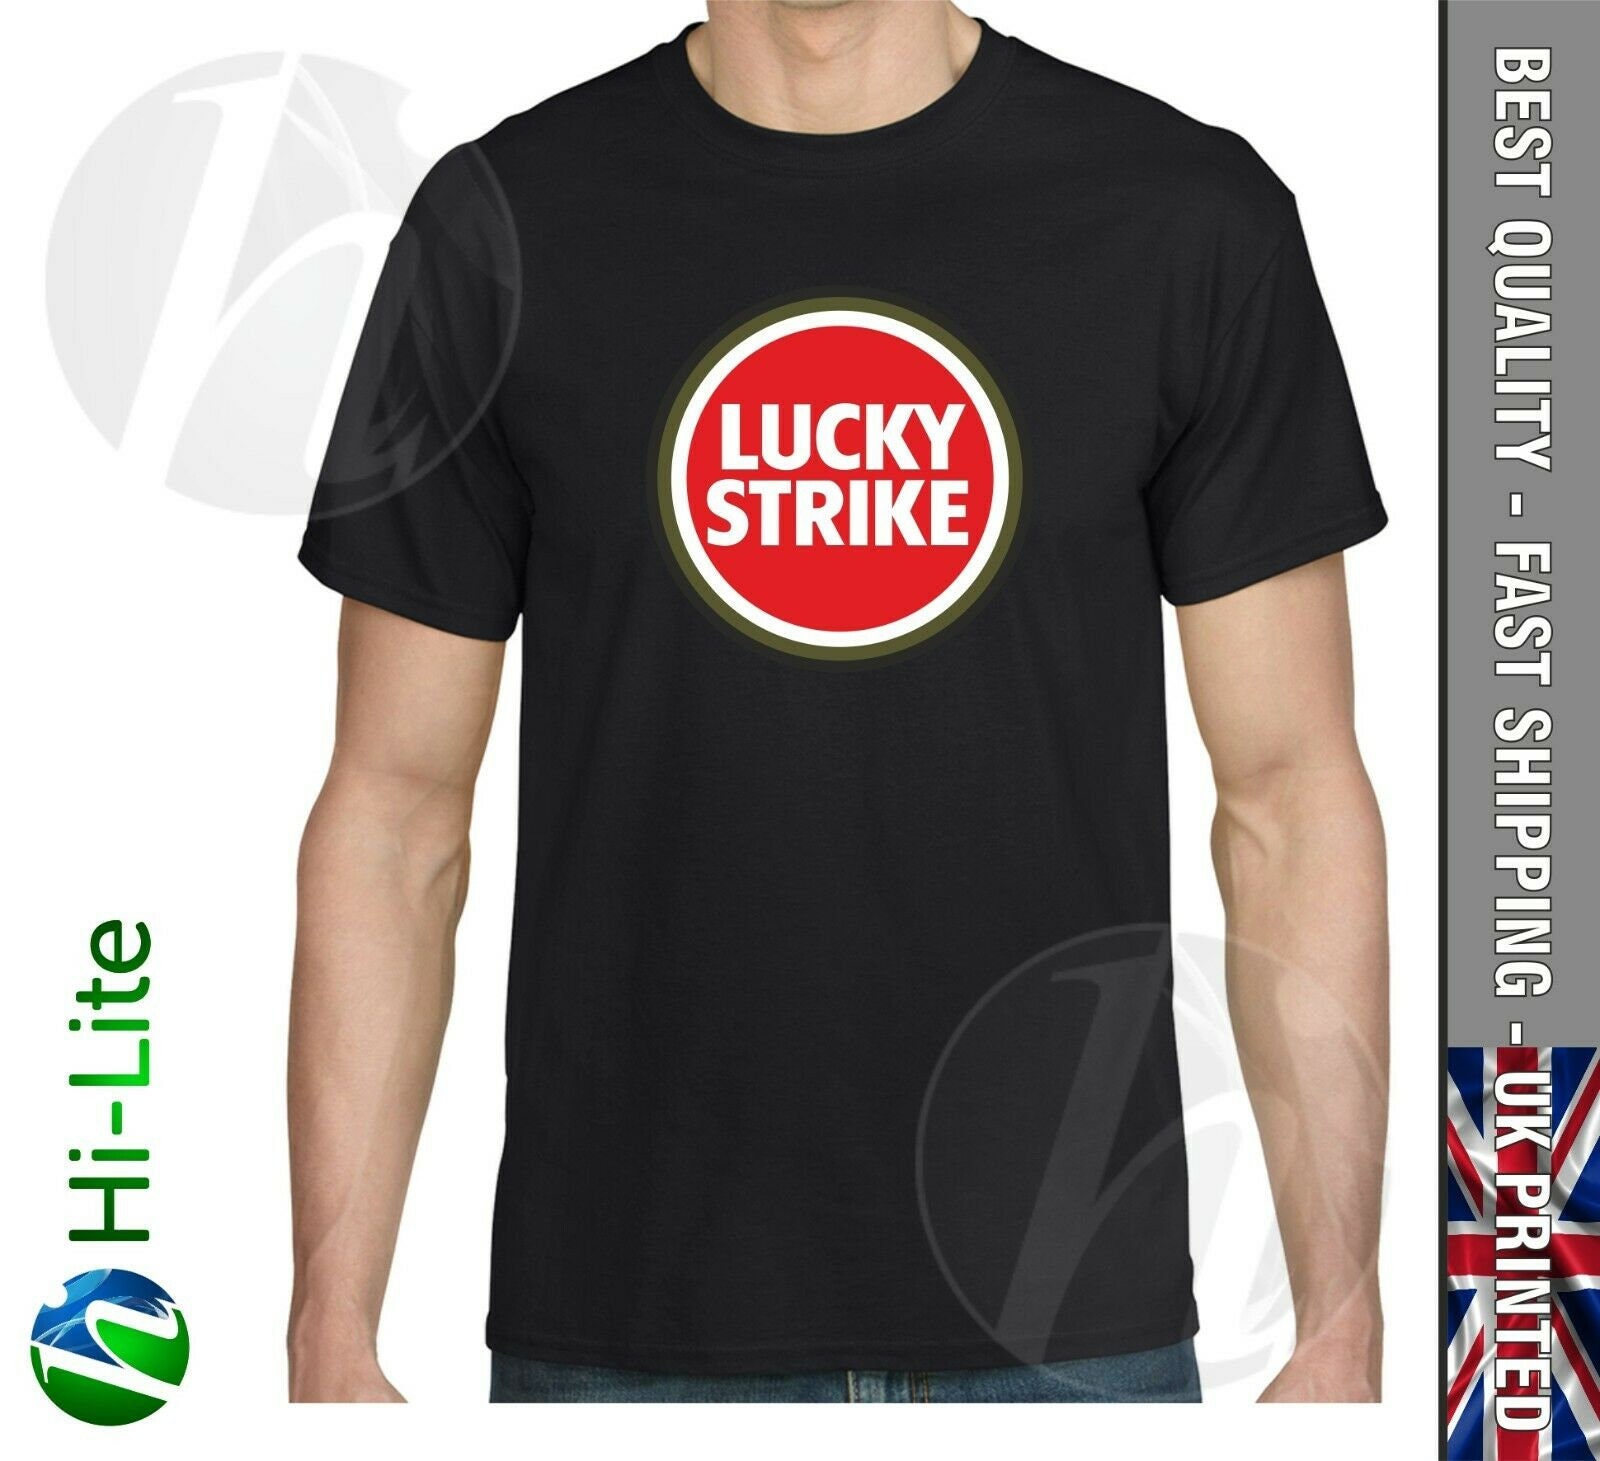 Ts36 lucky strike logo Black t shirt rgv250 gsxr schwantz yamaha suzuki rainey